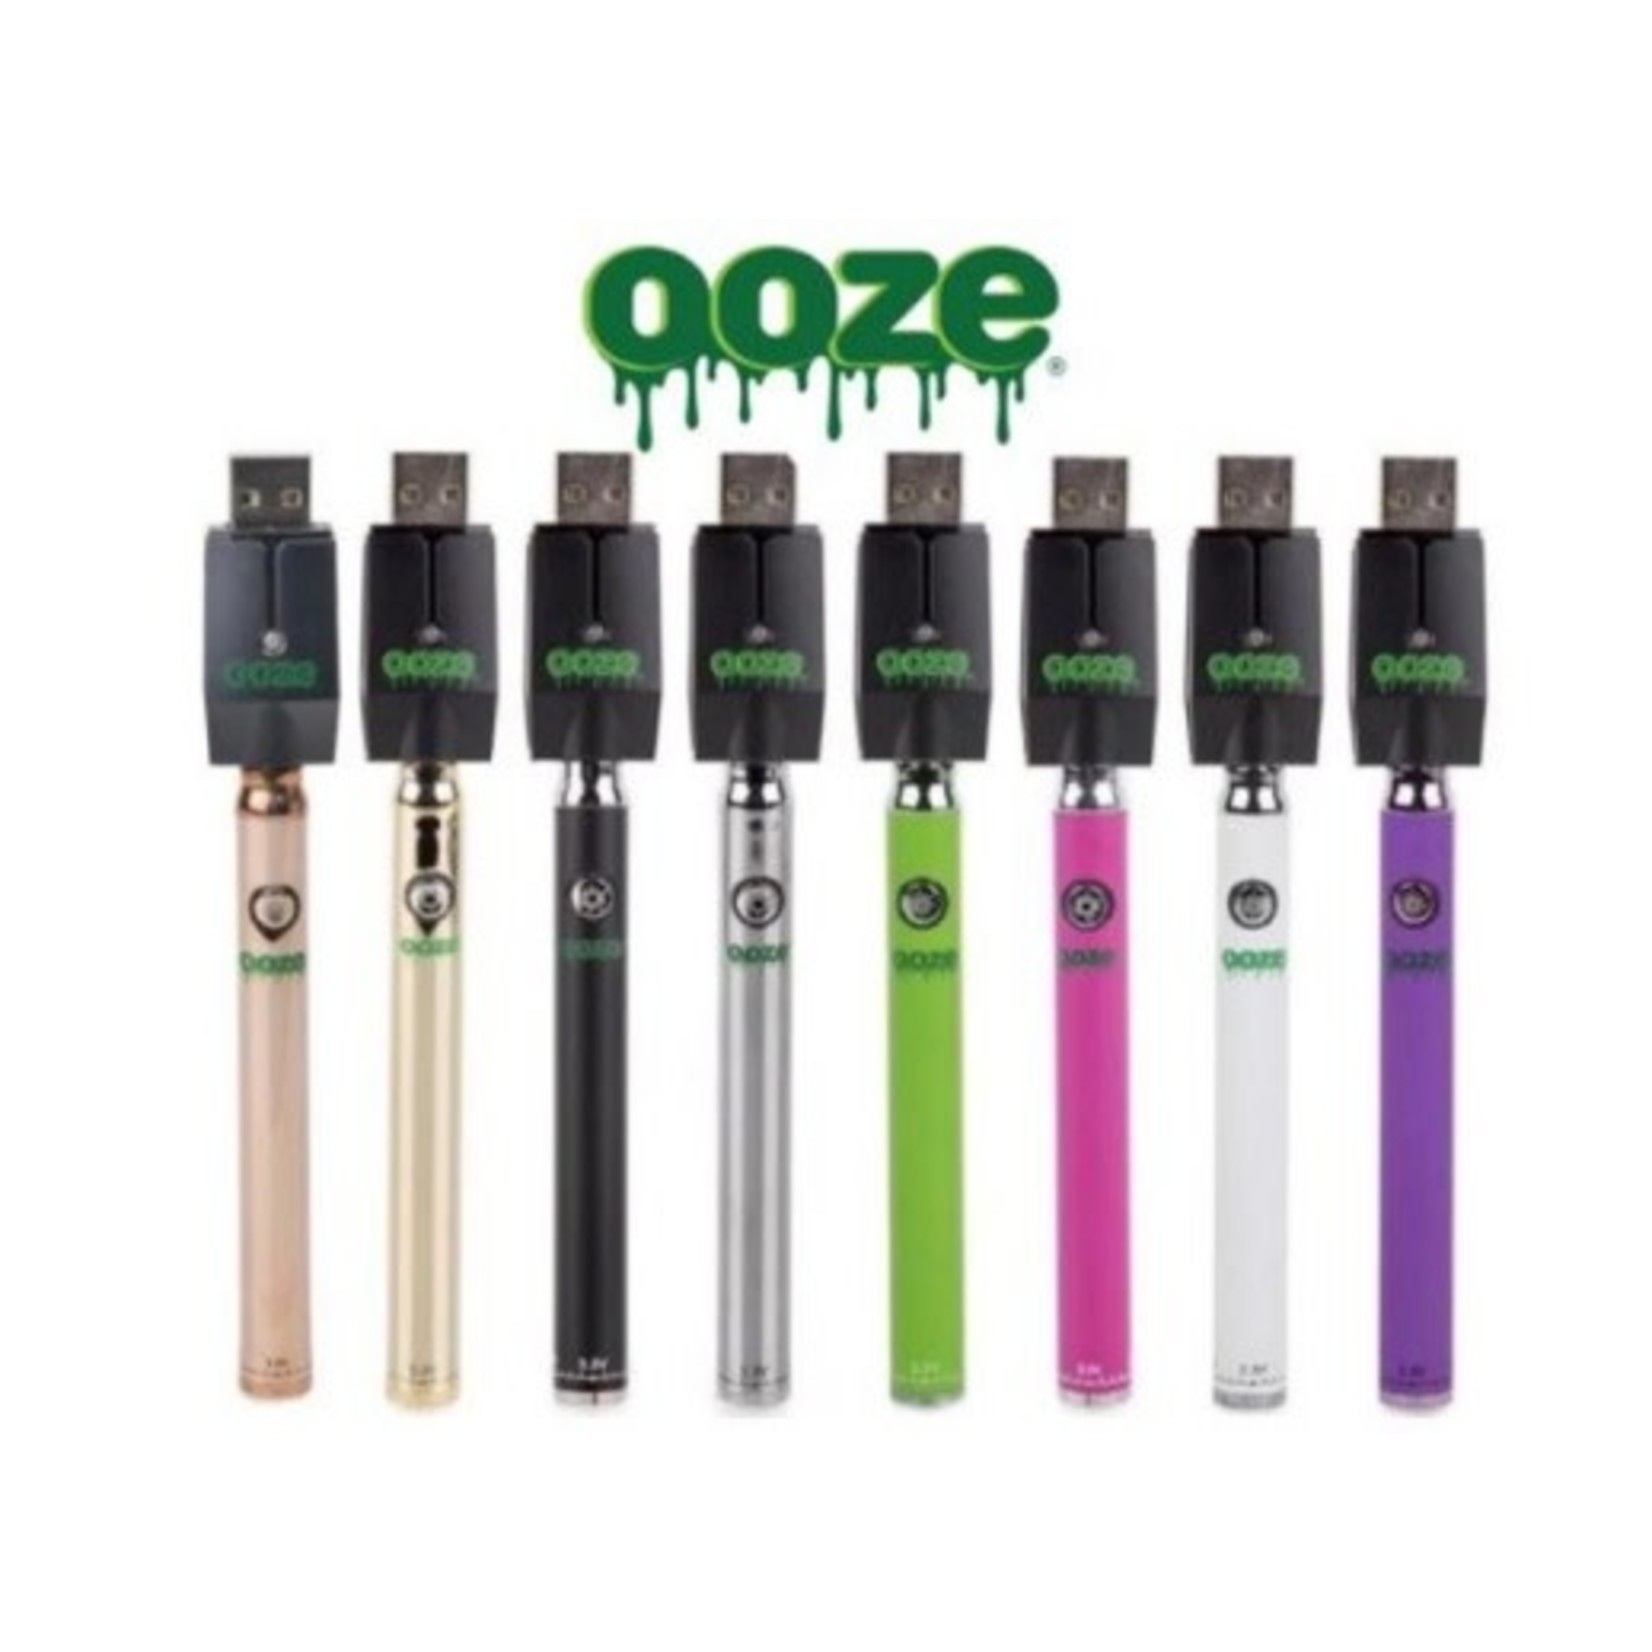 Ooze Ooze Slim Twist 510 Thread 320 mAh CBD Vape Pen Battery + USB Charger